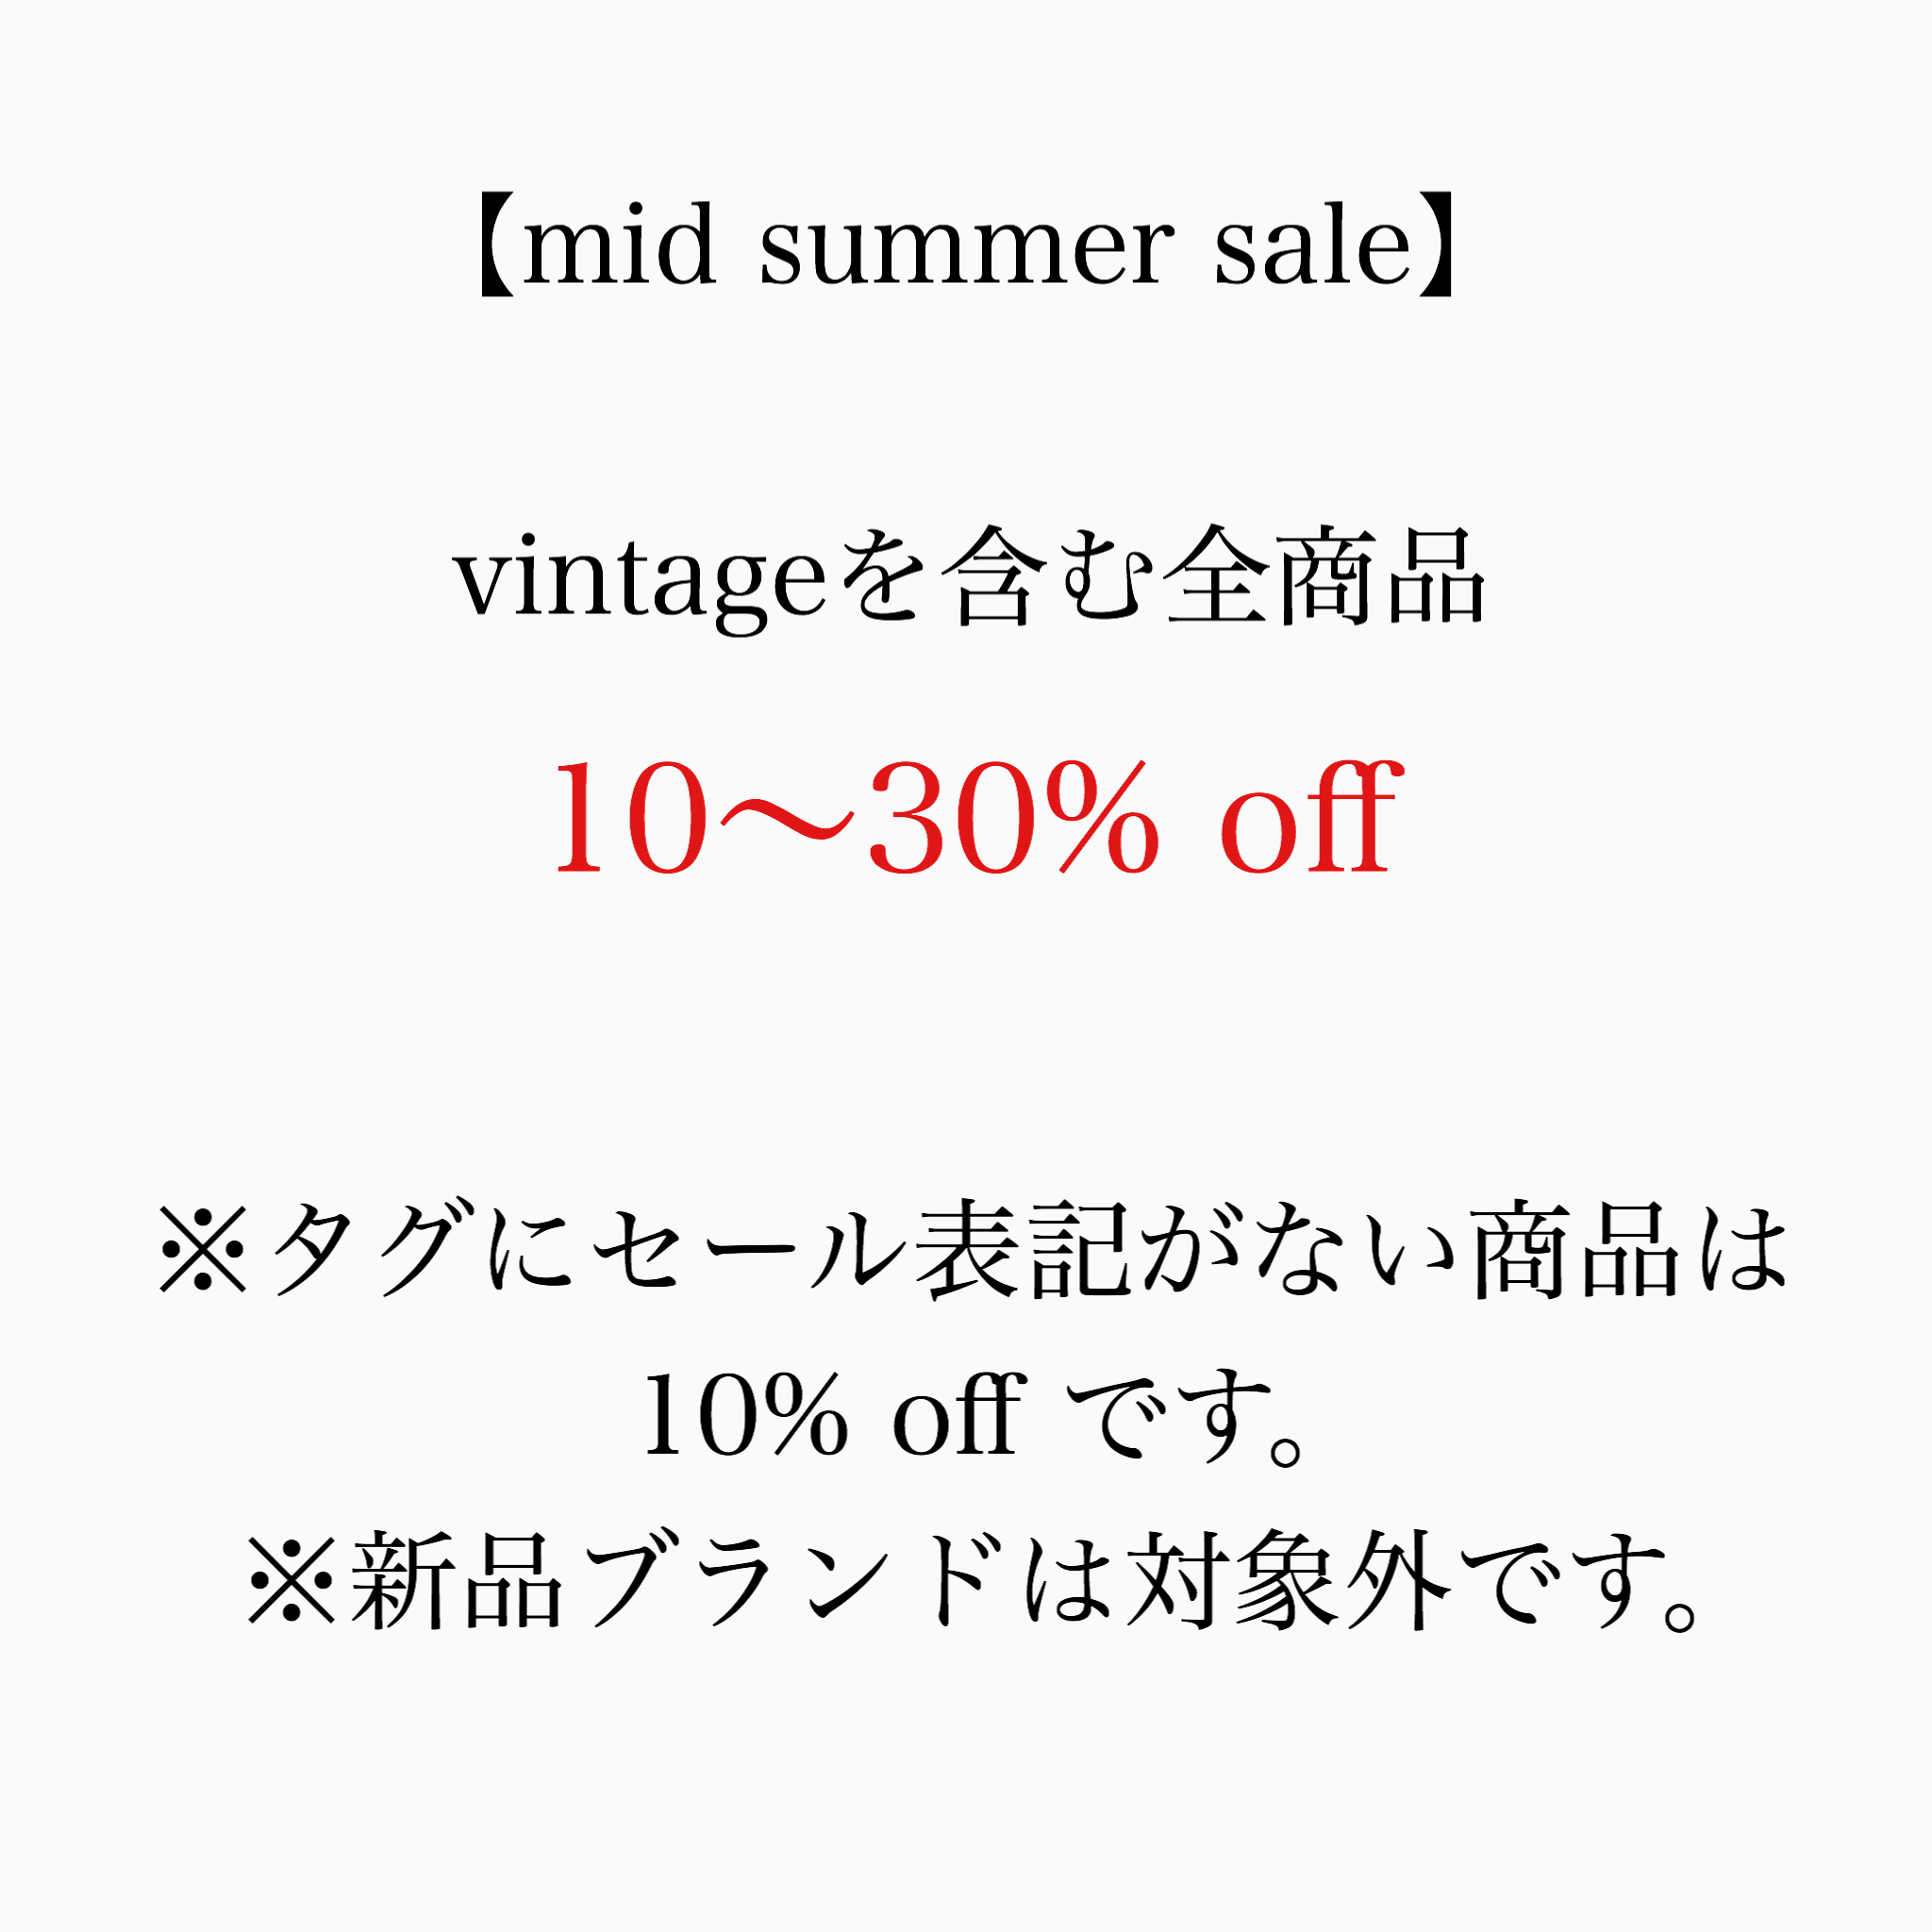 mid summer sale 最終日